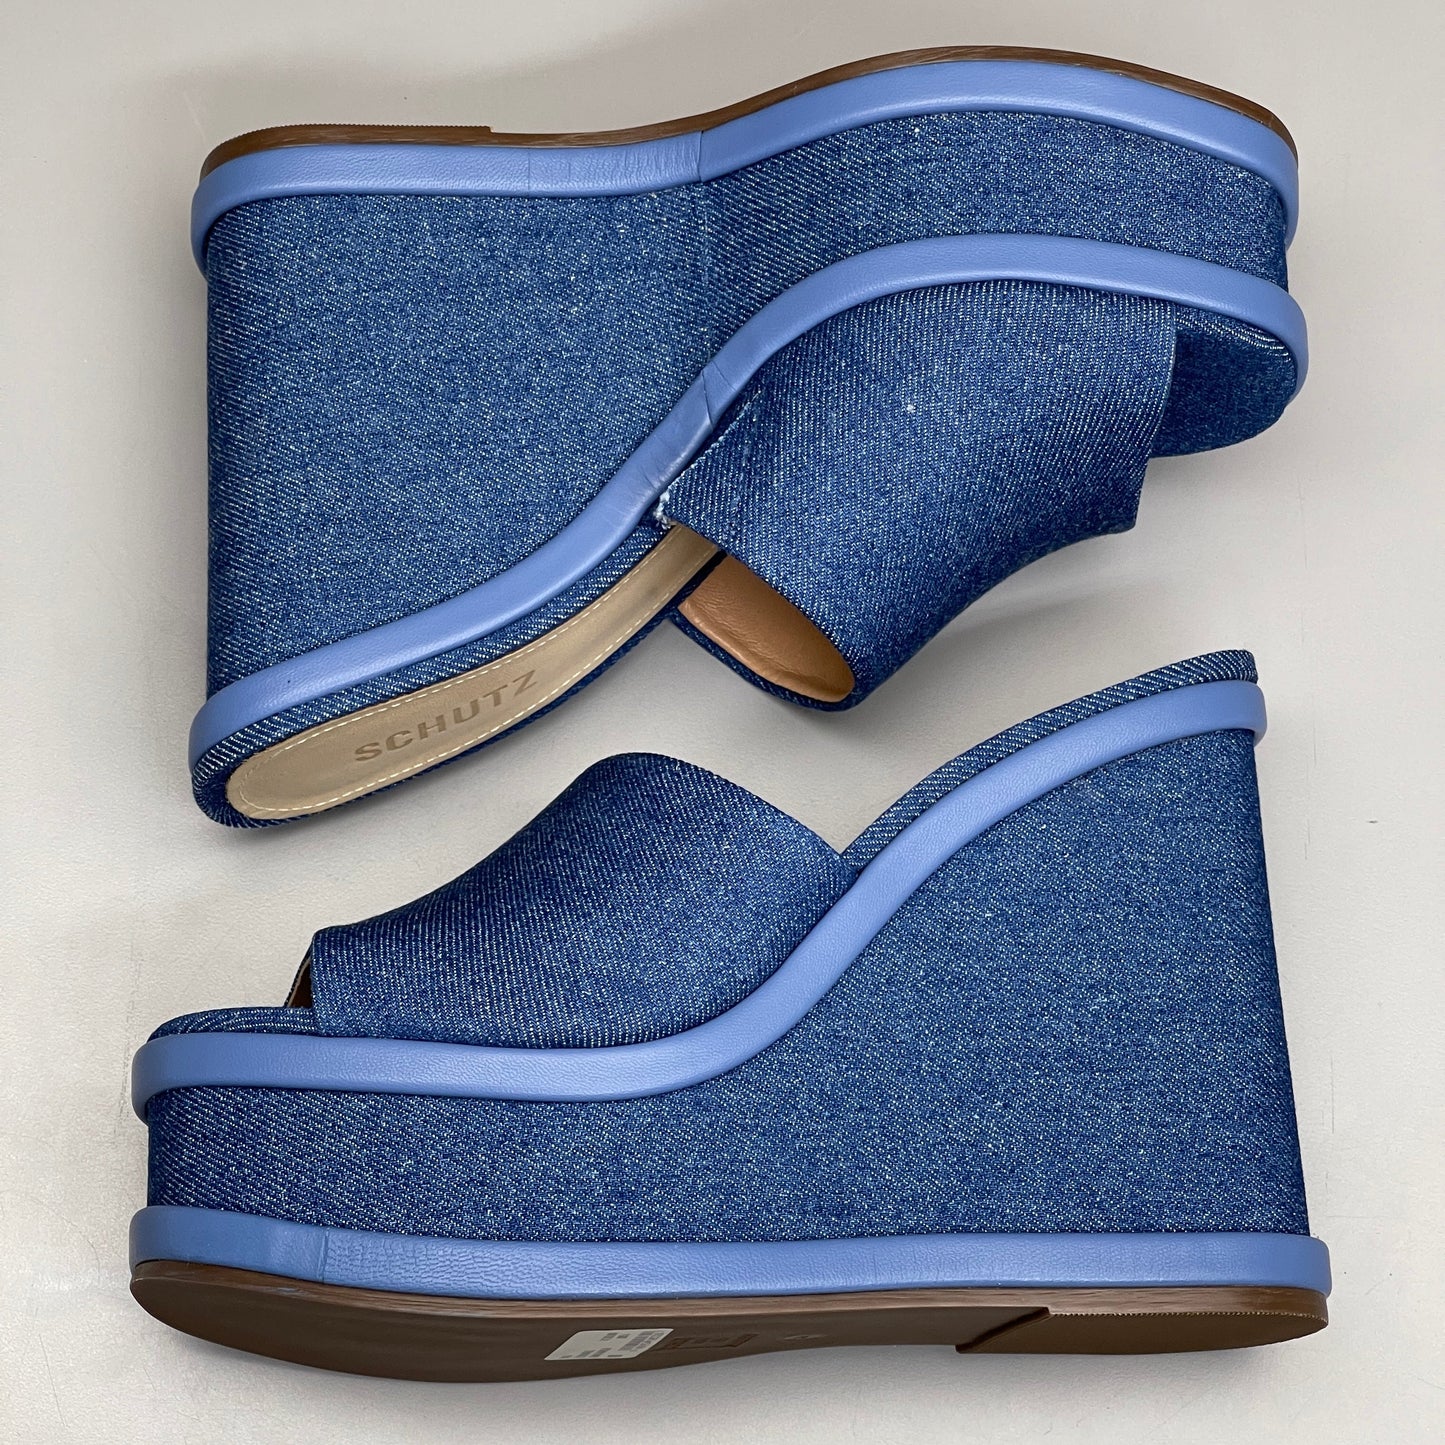 SCHUTZ Dalle Denim Women's Wedge Sandal Blue Platform Shoe Sz 8B (New)